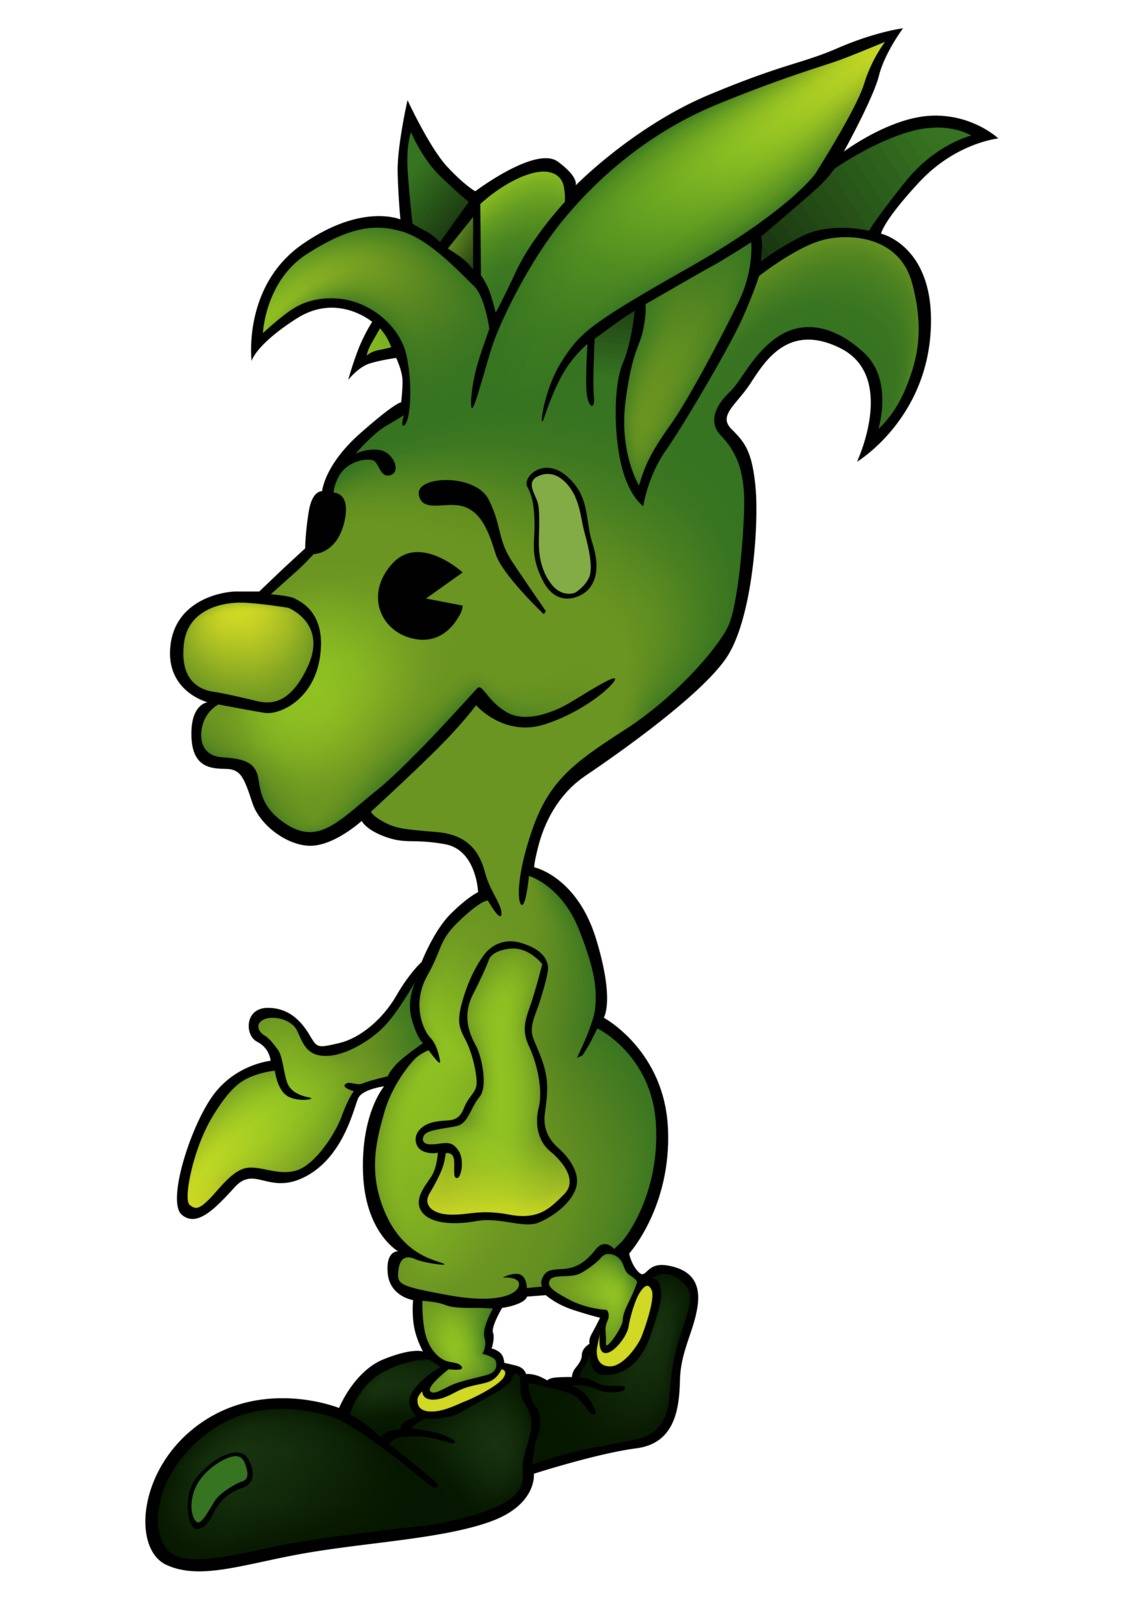 Green Character - Colored Cartoon Illustration, Vector